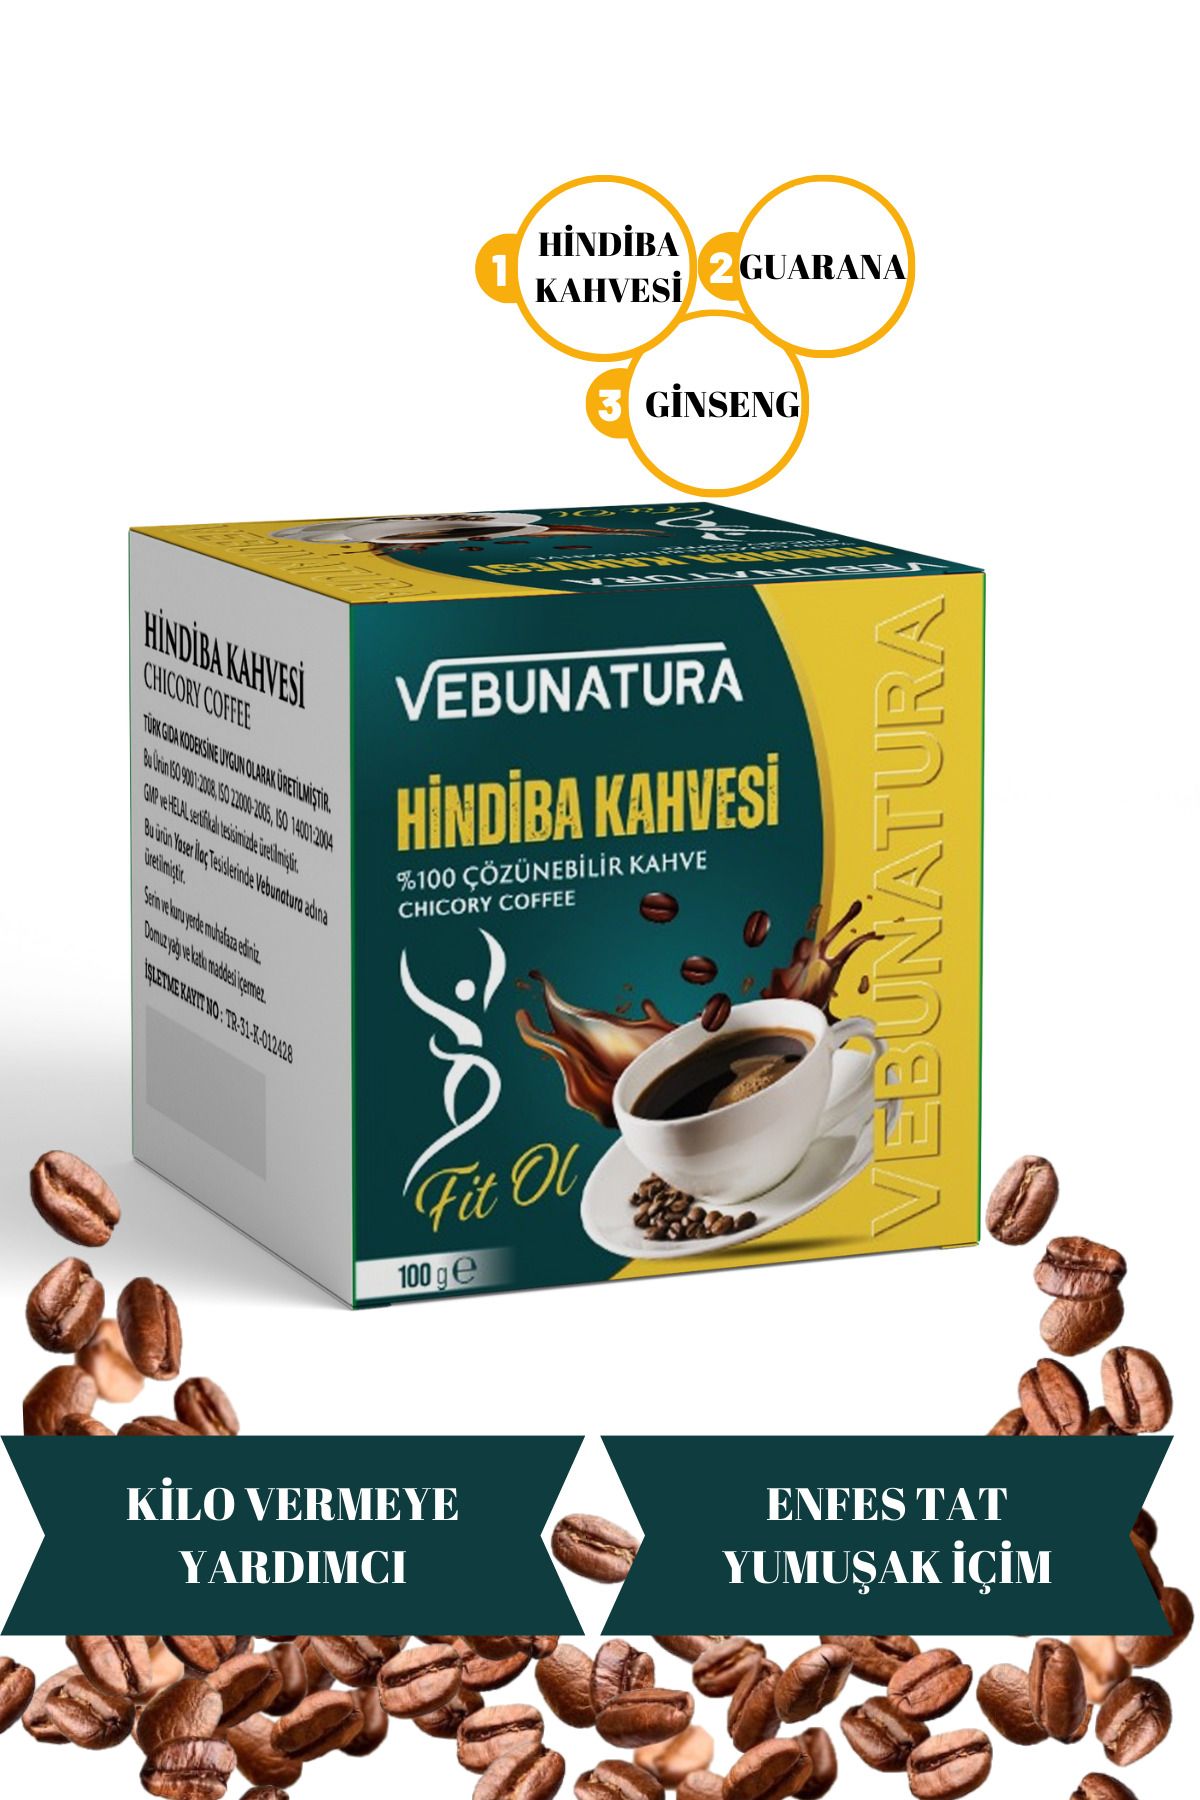 VEBUNATURA Hindiba Kahvesi, Guarana,Ginseng Detox Kahve 1 Aylık -( 60 Kullanım ) NET 100gr